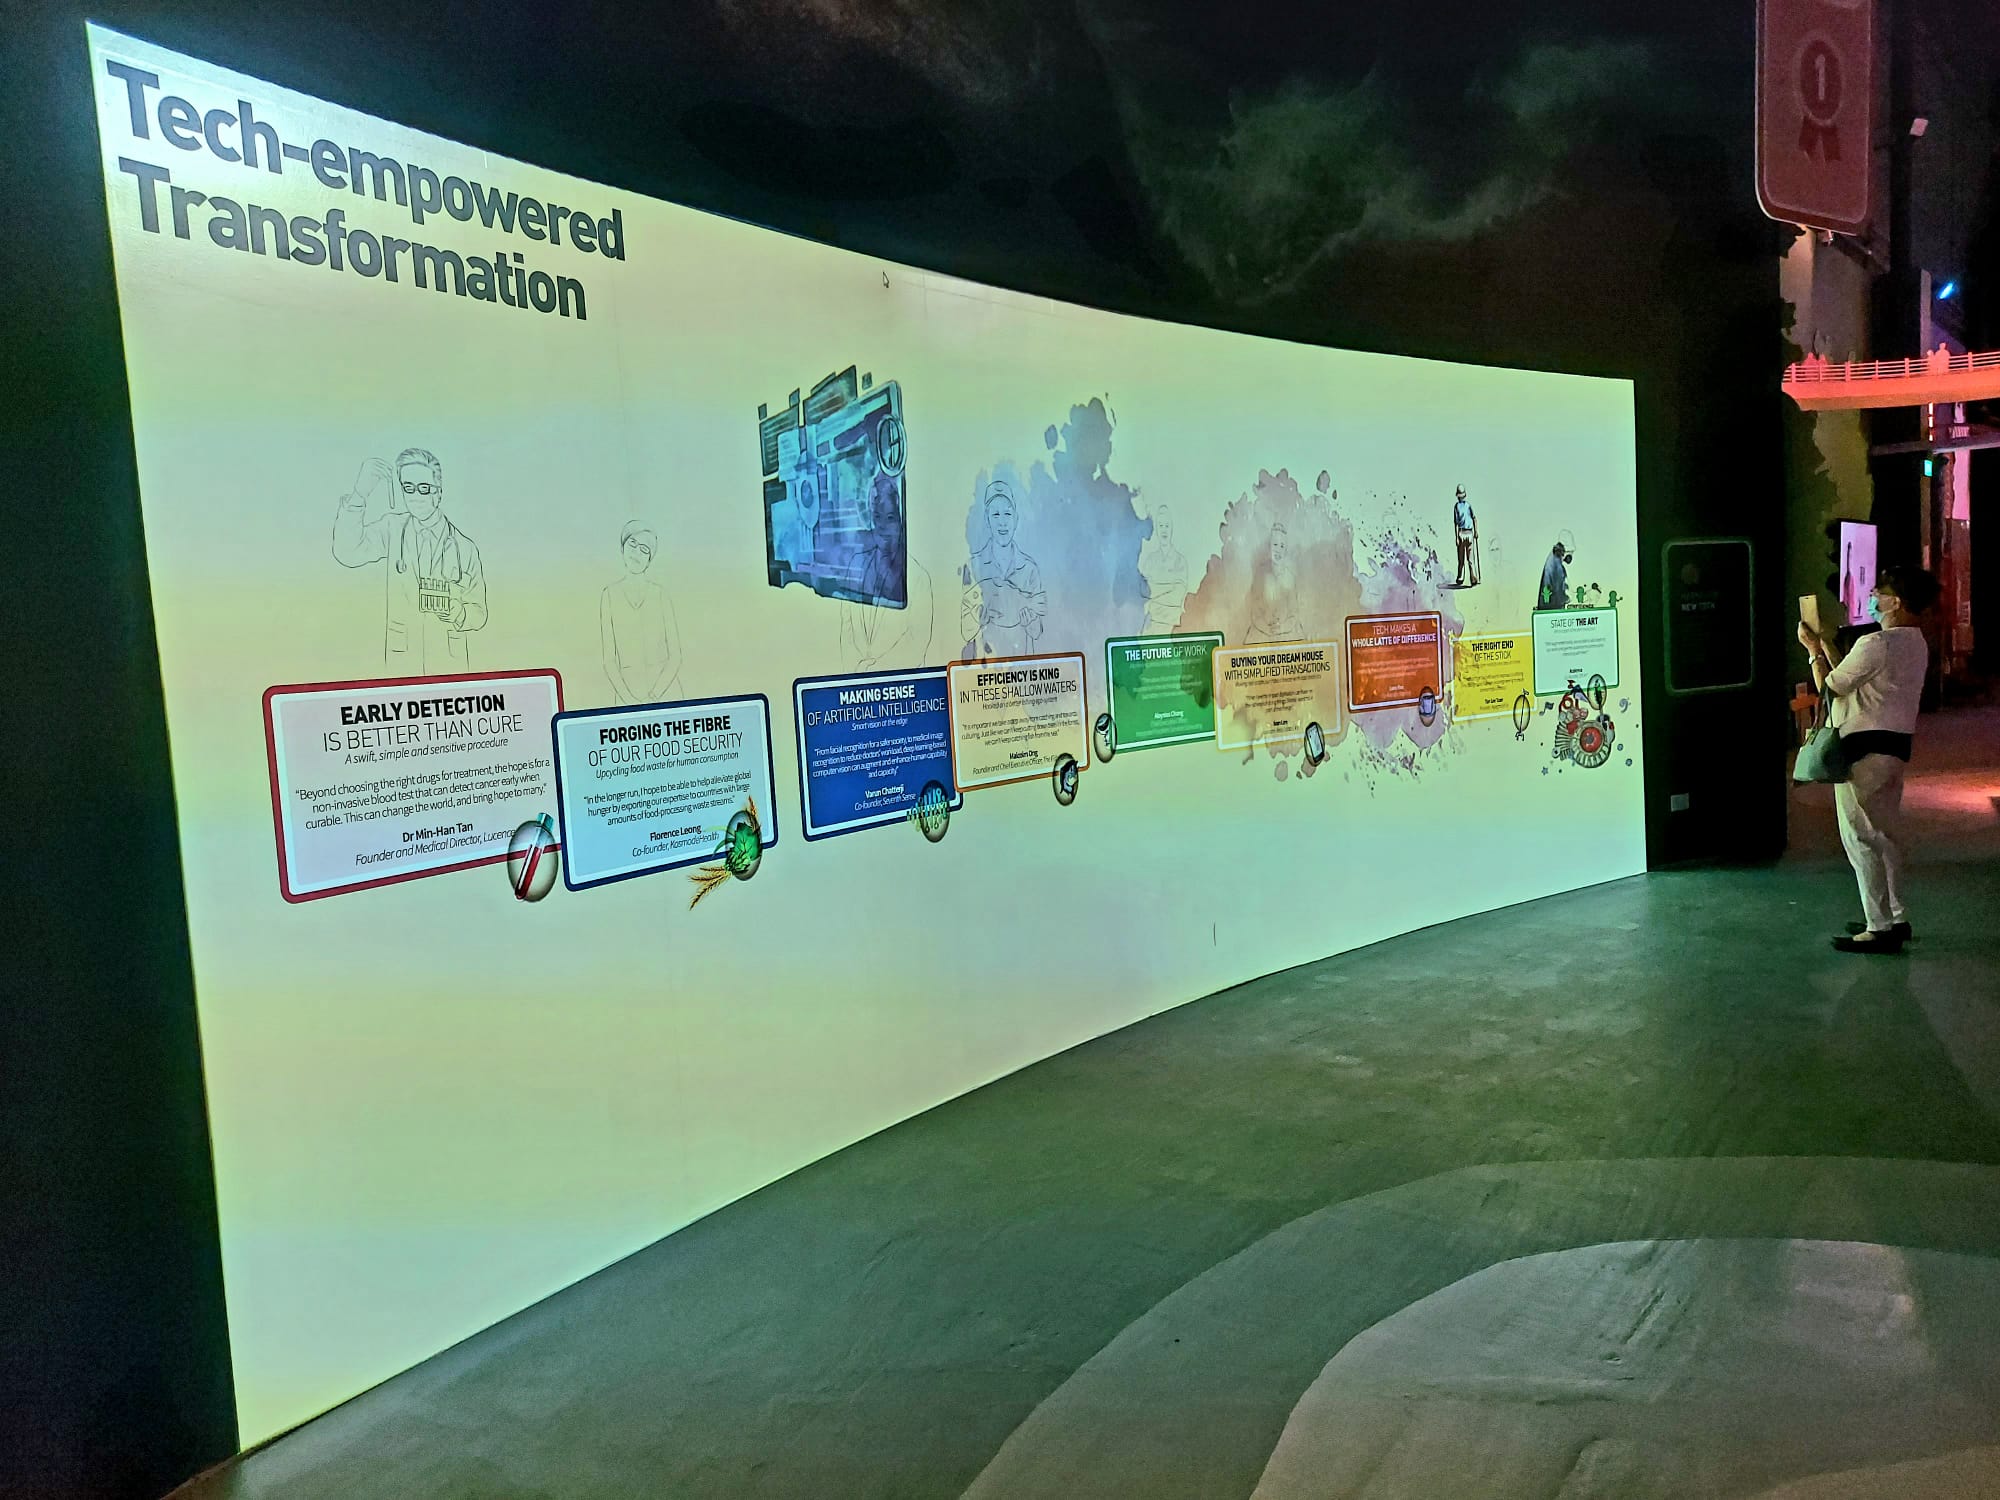 Singapore Discovery Centre, Tech-Empowered Transformation